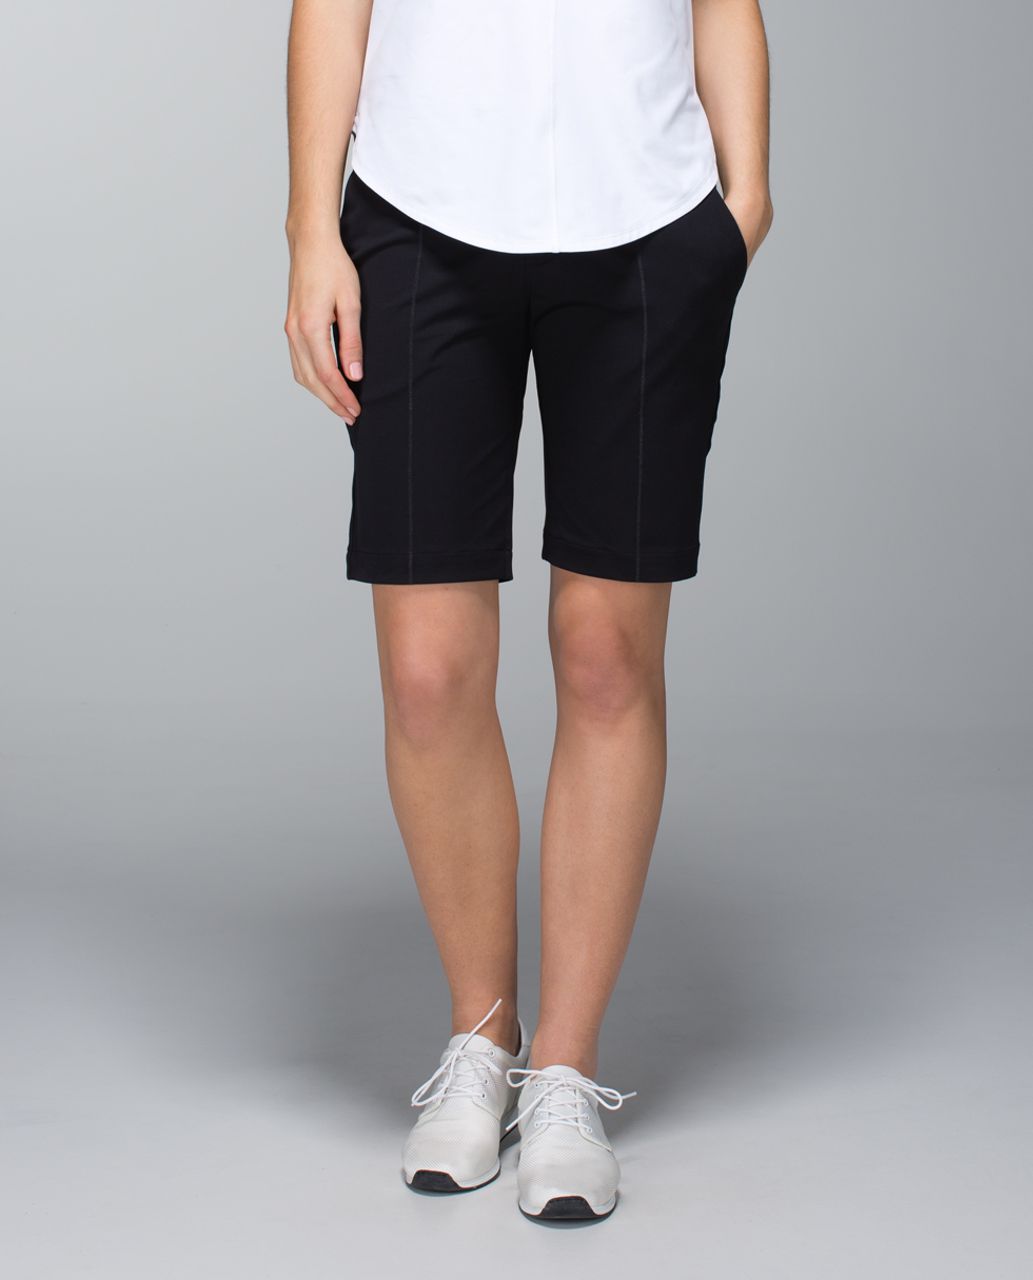 lululemon golf shorts womens